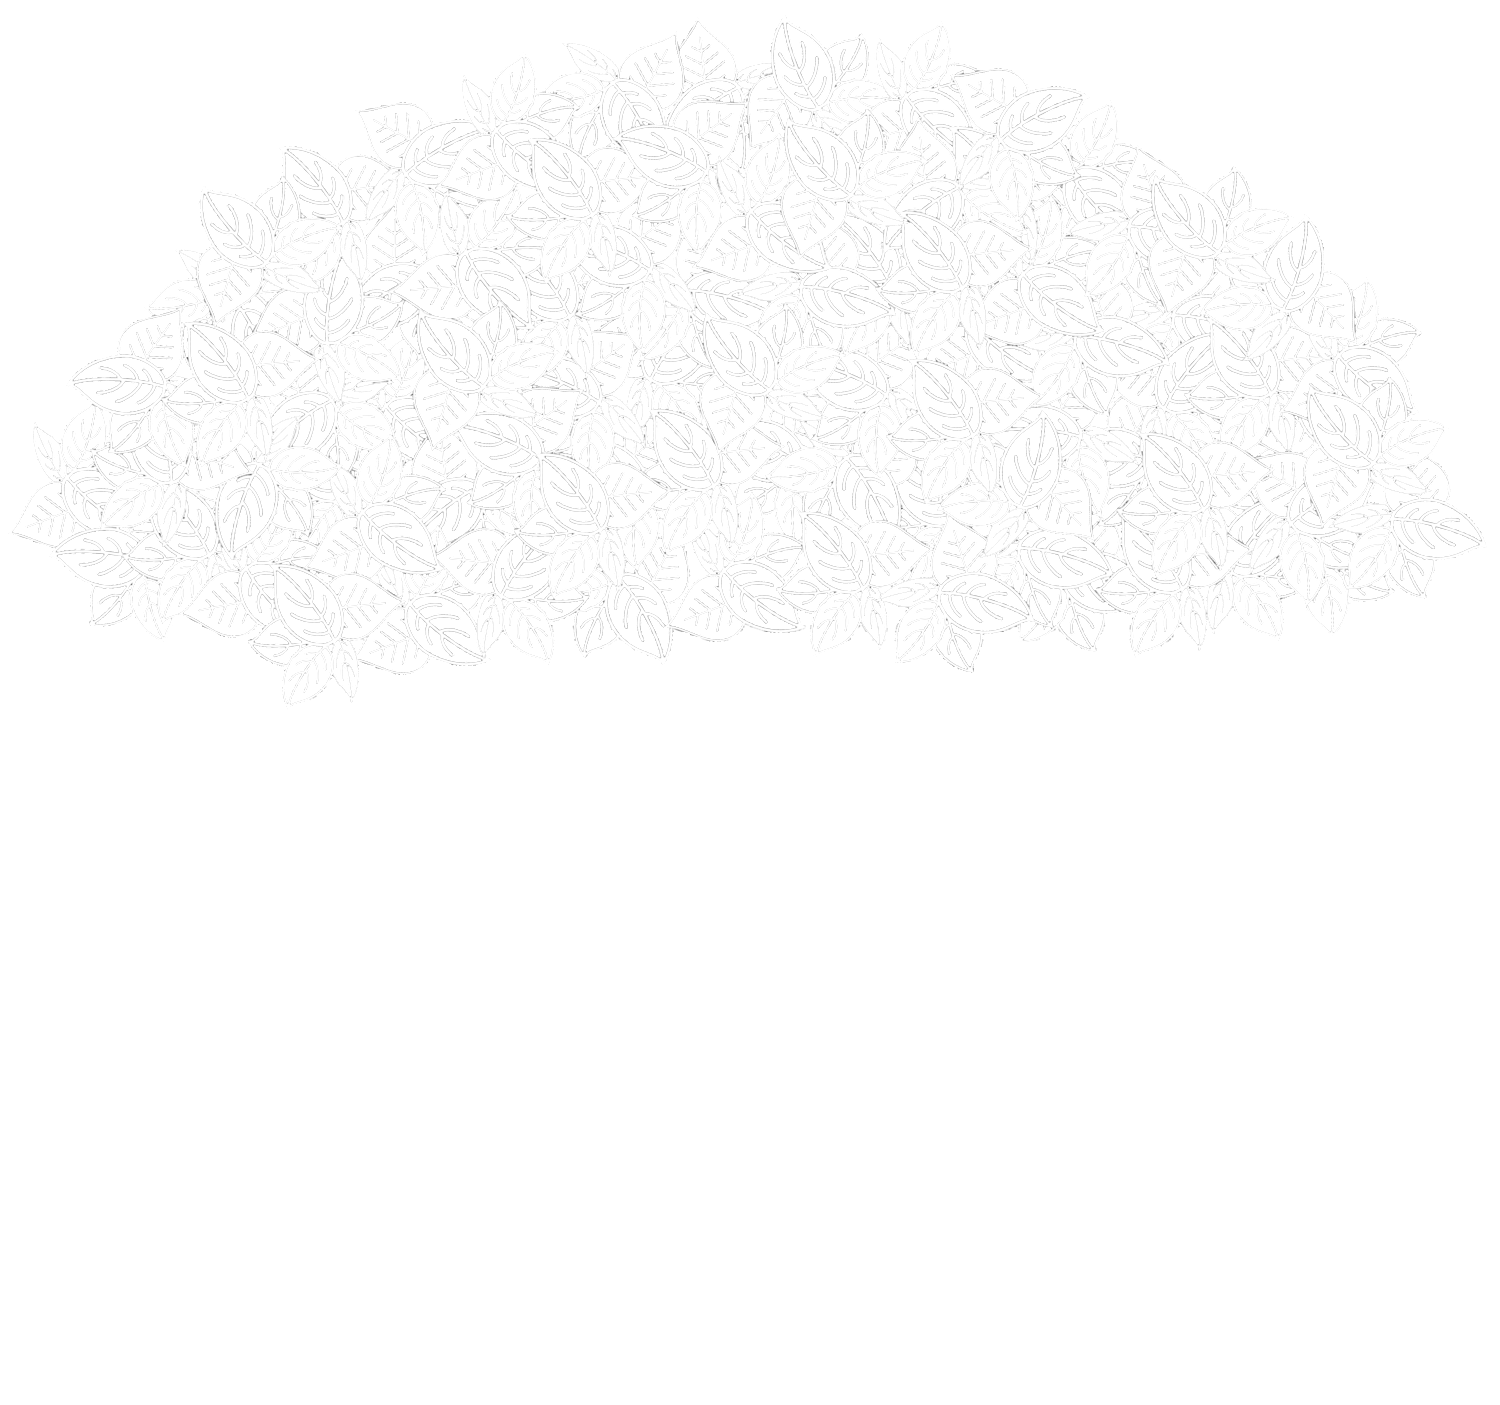 Mordecai Beverage Co.